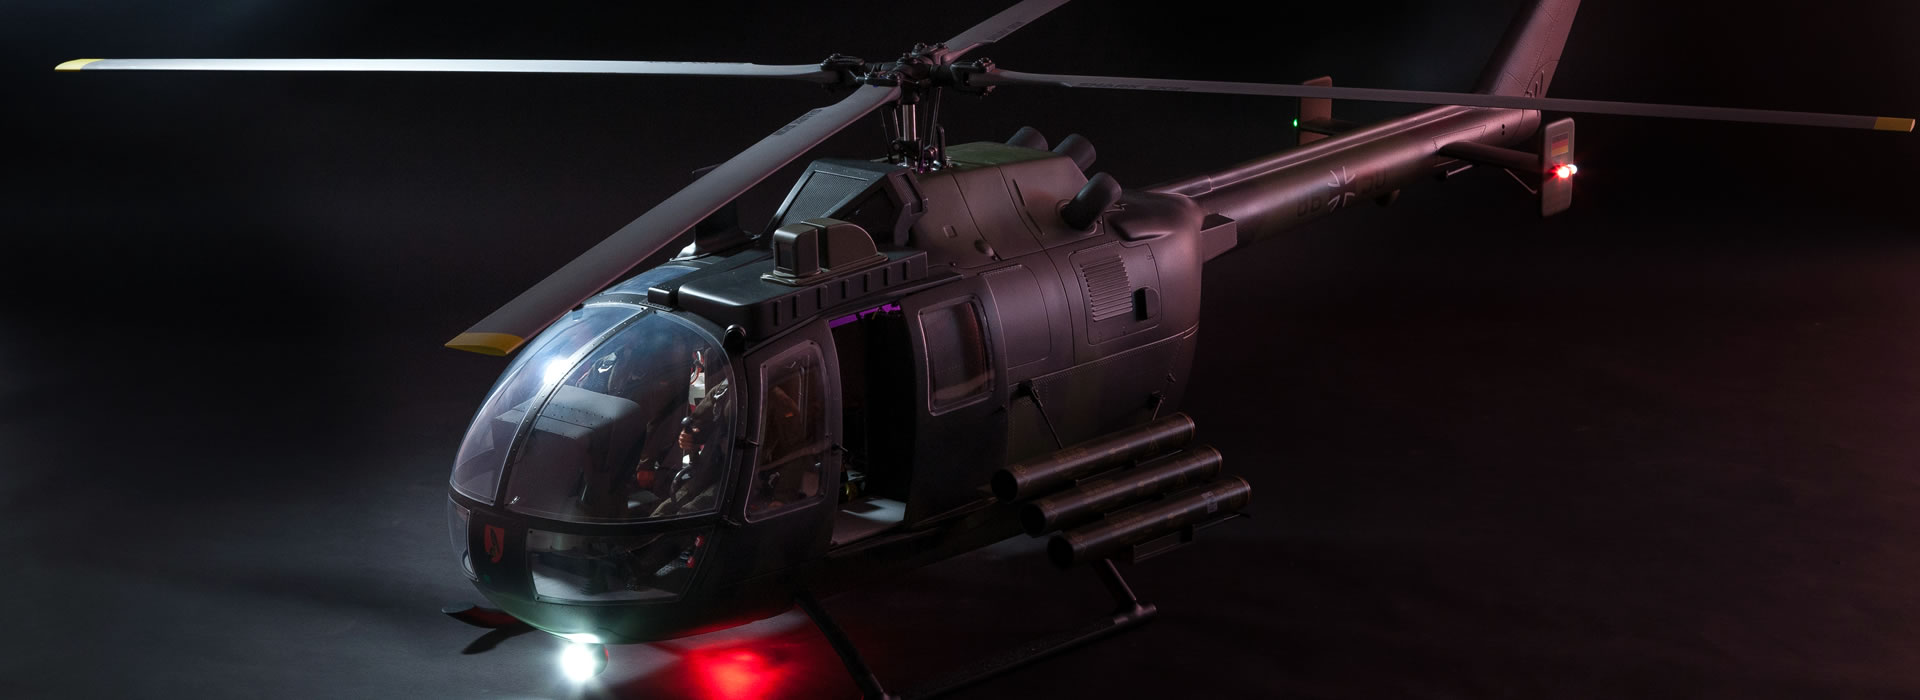 RC Helikopter Scale Modellbau BO 105 PAH1